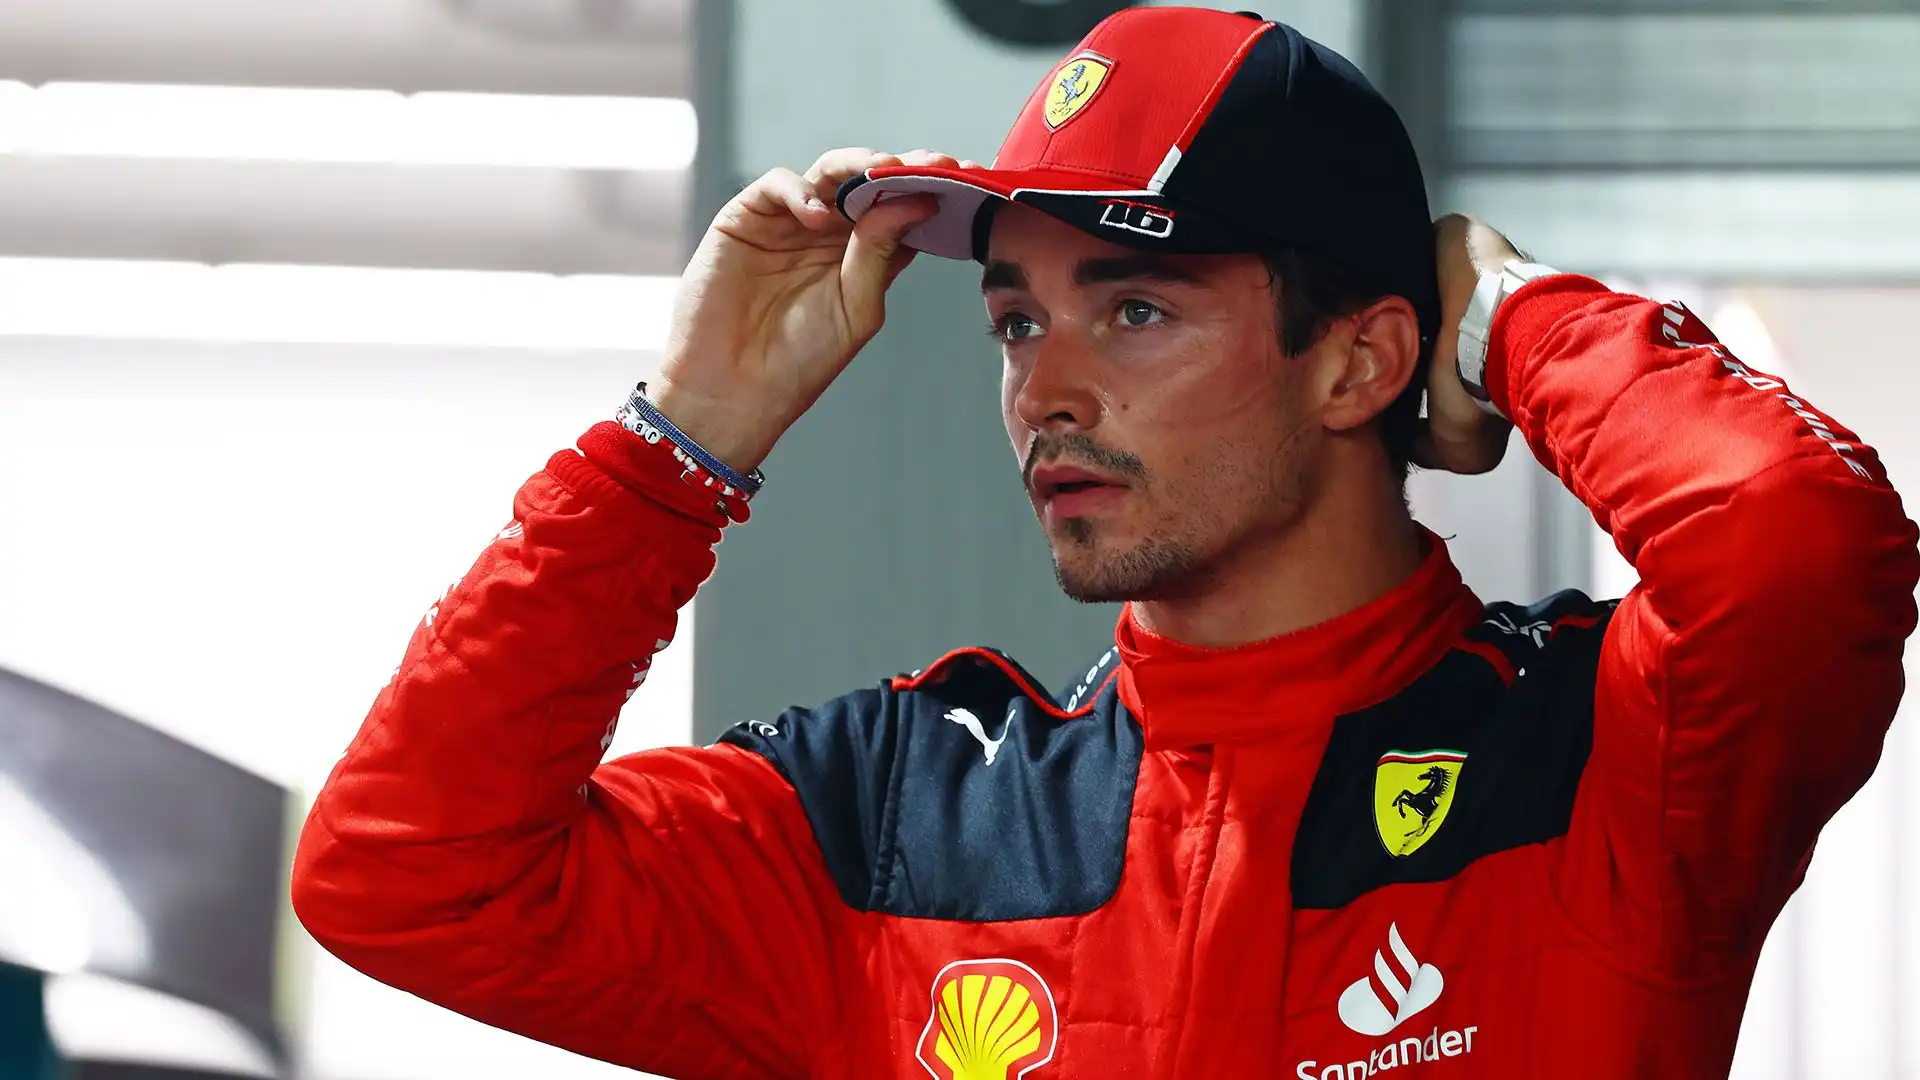 Charles Leclerc (Ferrari): 19 milioni di dollari (14 milioni di stipendio + 5 milioni di bonus)